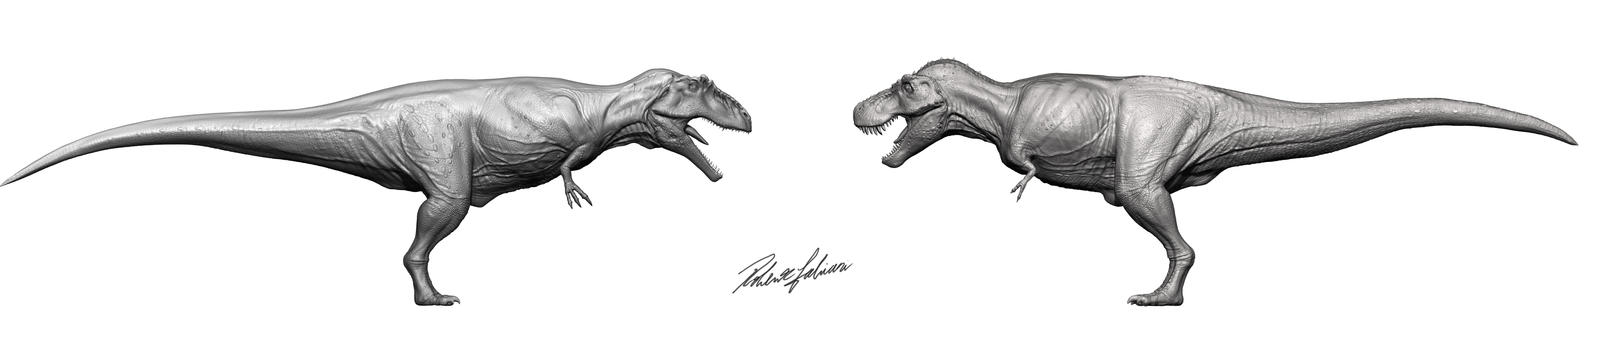 T-Rex vs Giganotosaurus by robertfabiani on DeviantArt - Giganotosaurus Vs T Rex Size